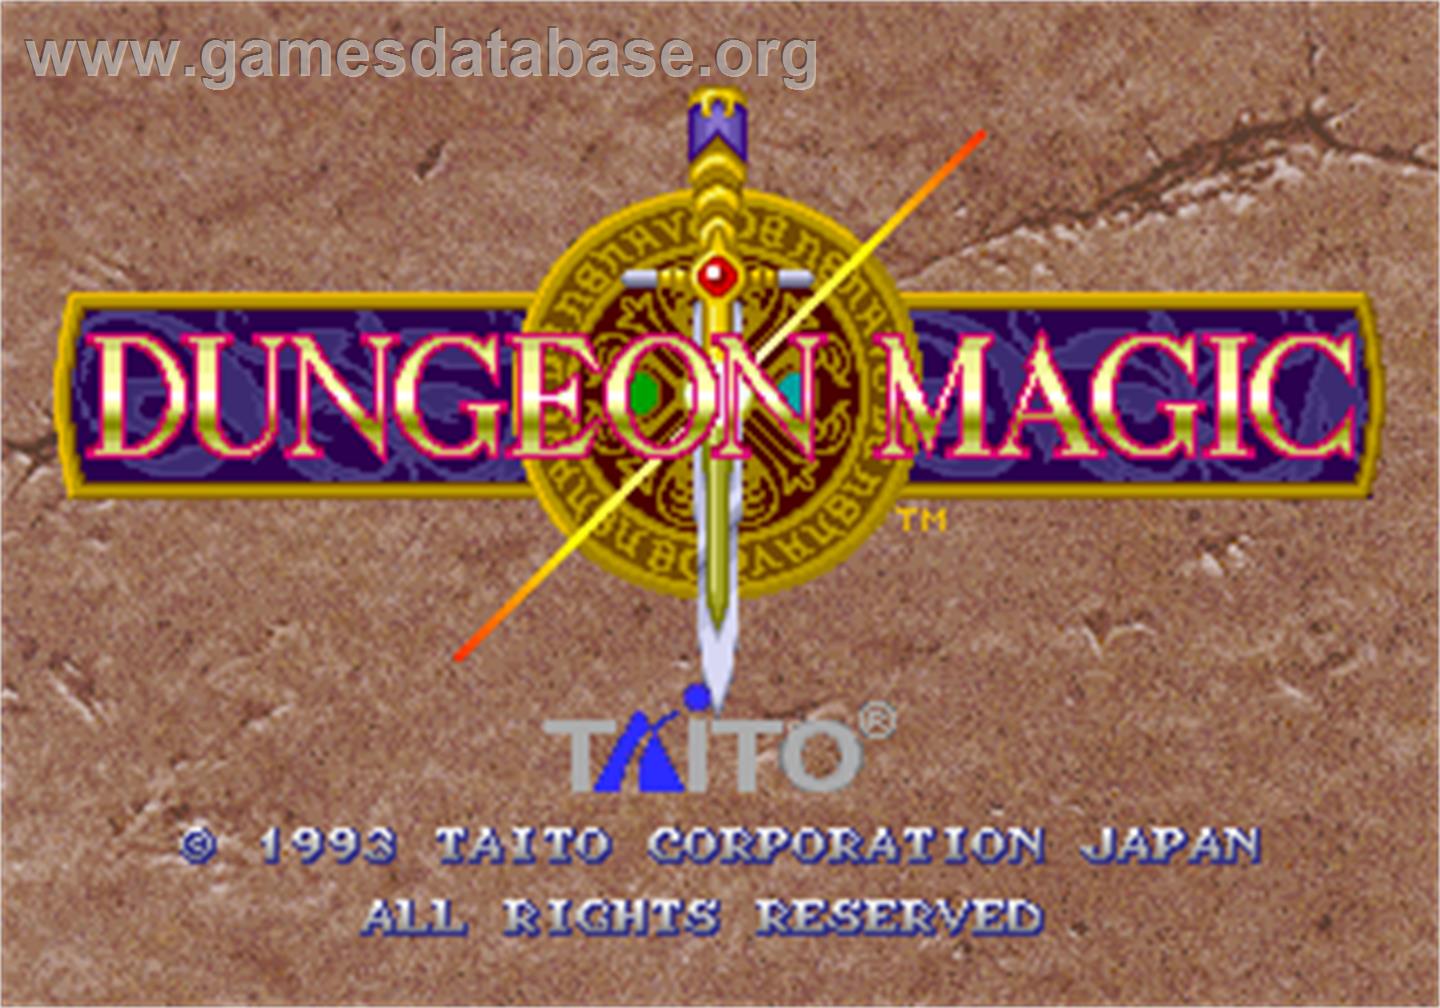 Dungeon Magic - Arcade - Artwork - Title Screen